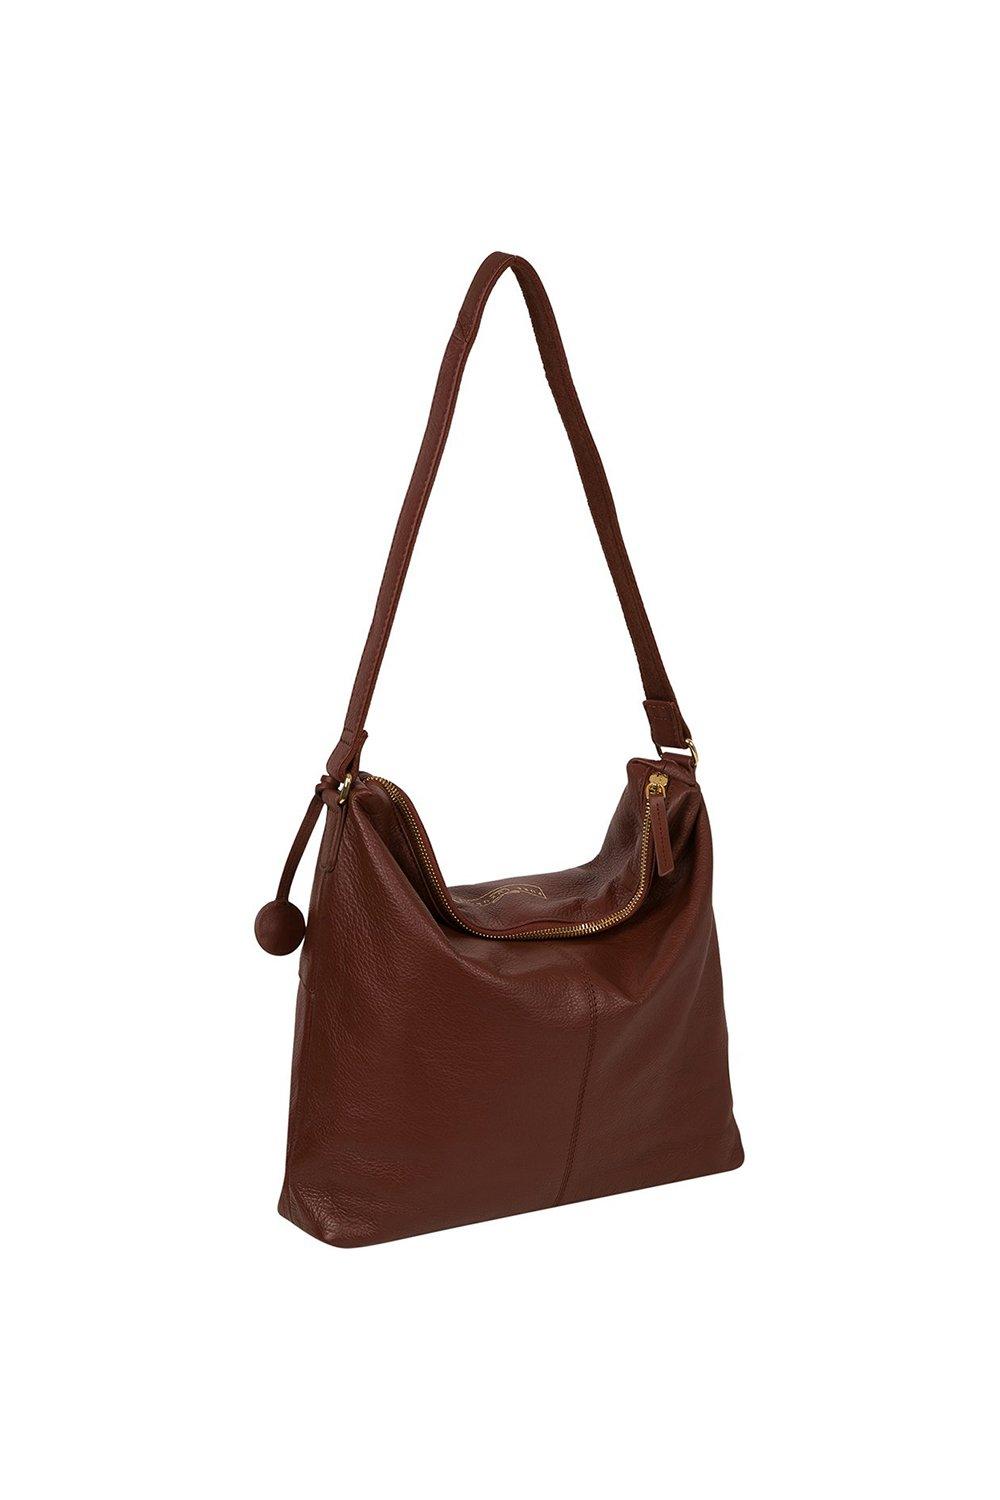 Handbags | Women's Handbags | Debenhams